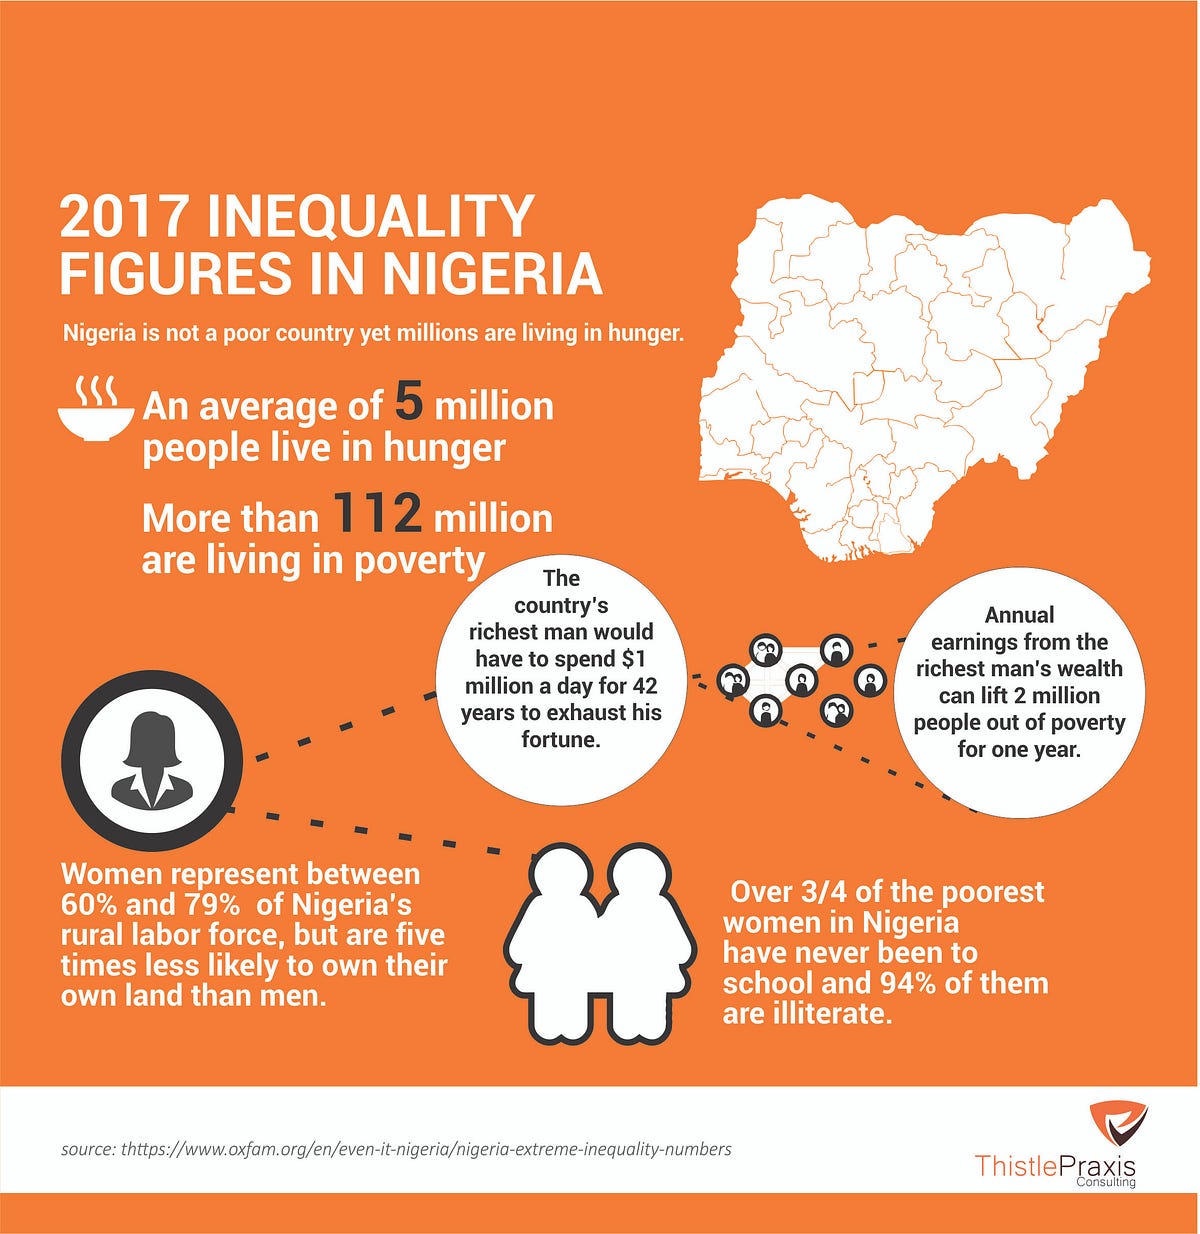 Bridging the inequality gap in Nigeria | by ThistlePraxis | Medium